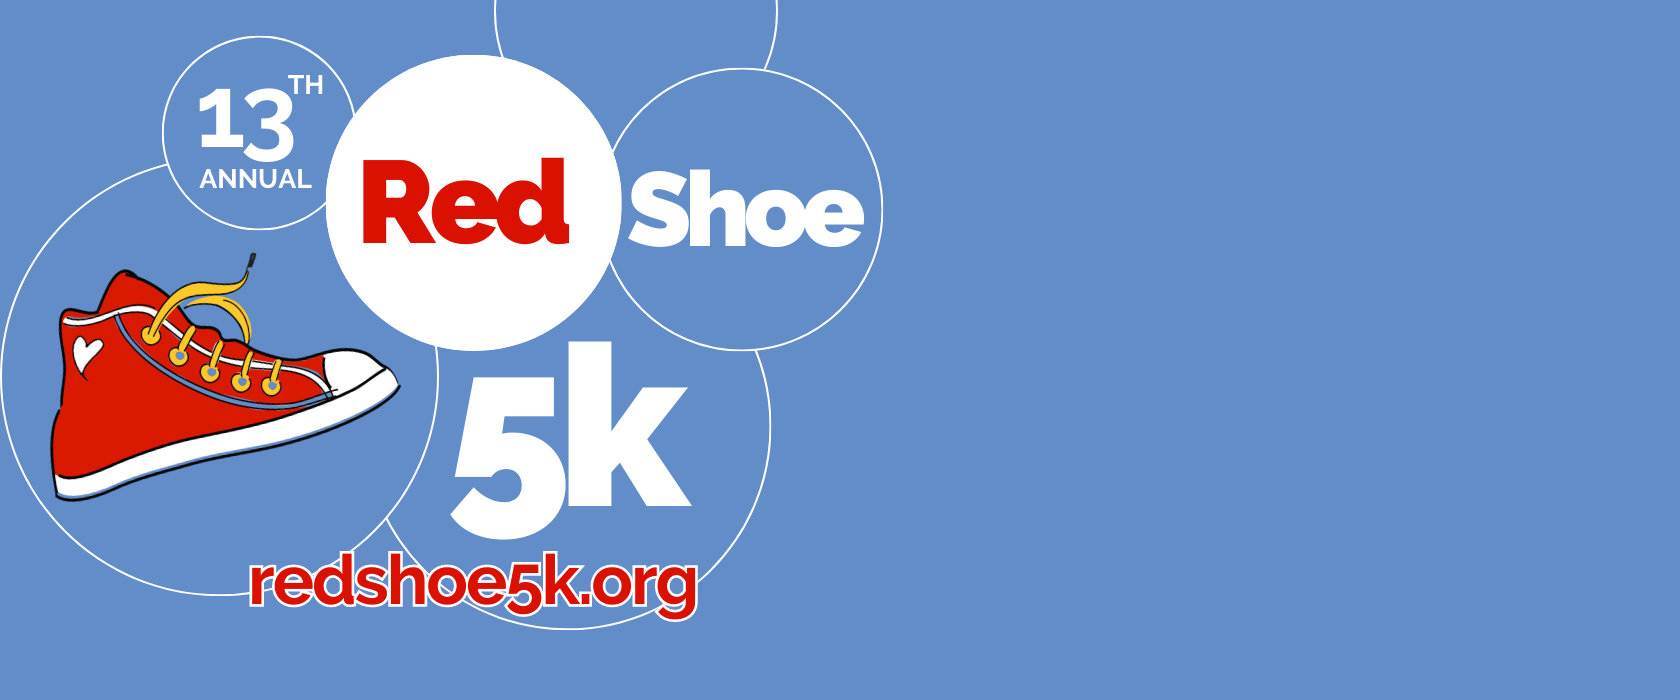 Red Shoe 5k